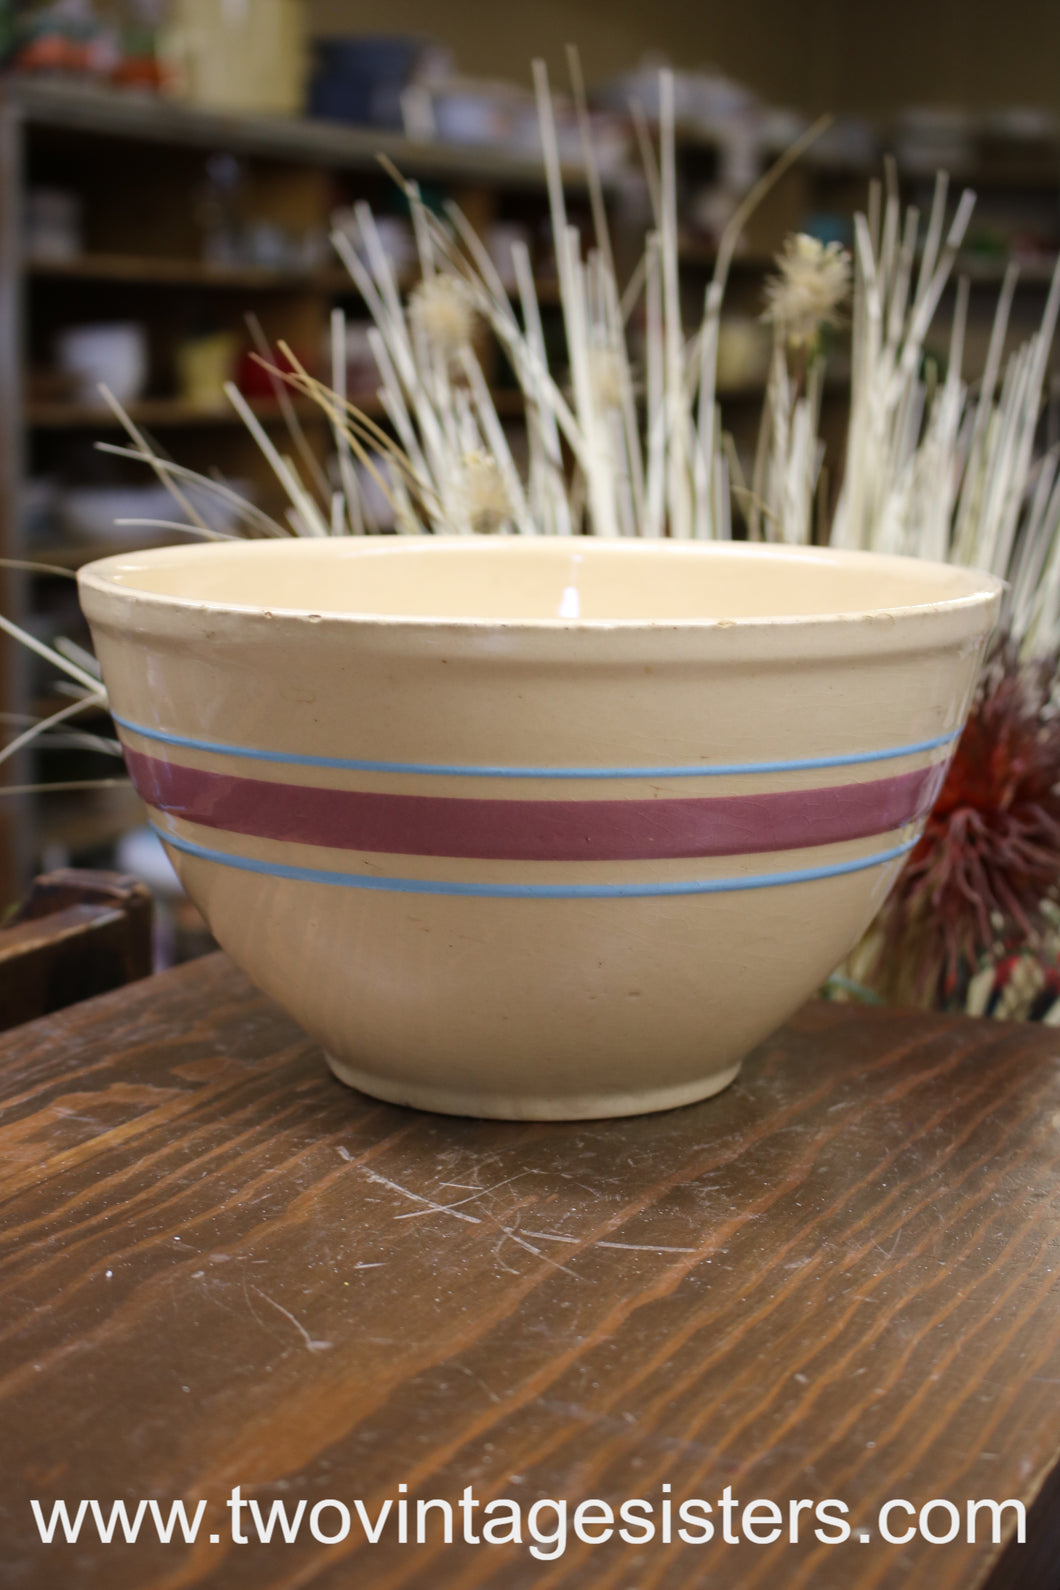 Watt Ceramic Mixing Bowl #9 - Collectible